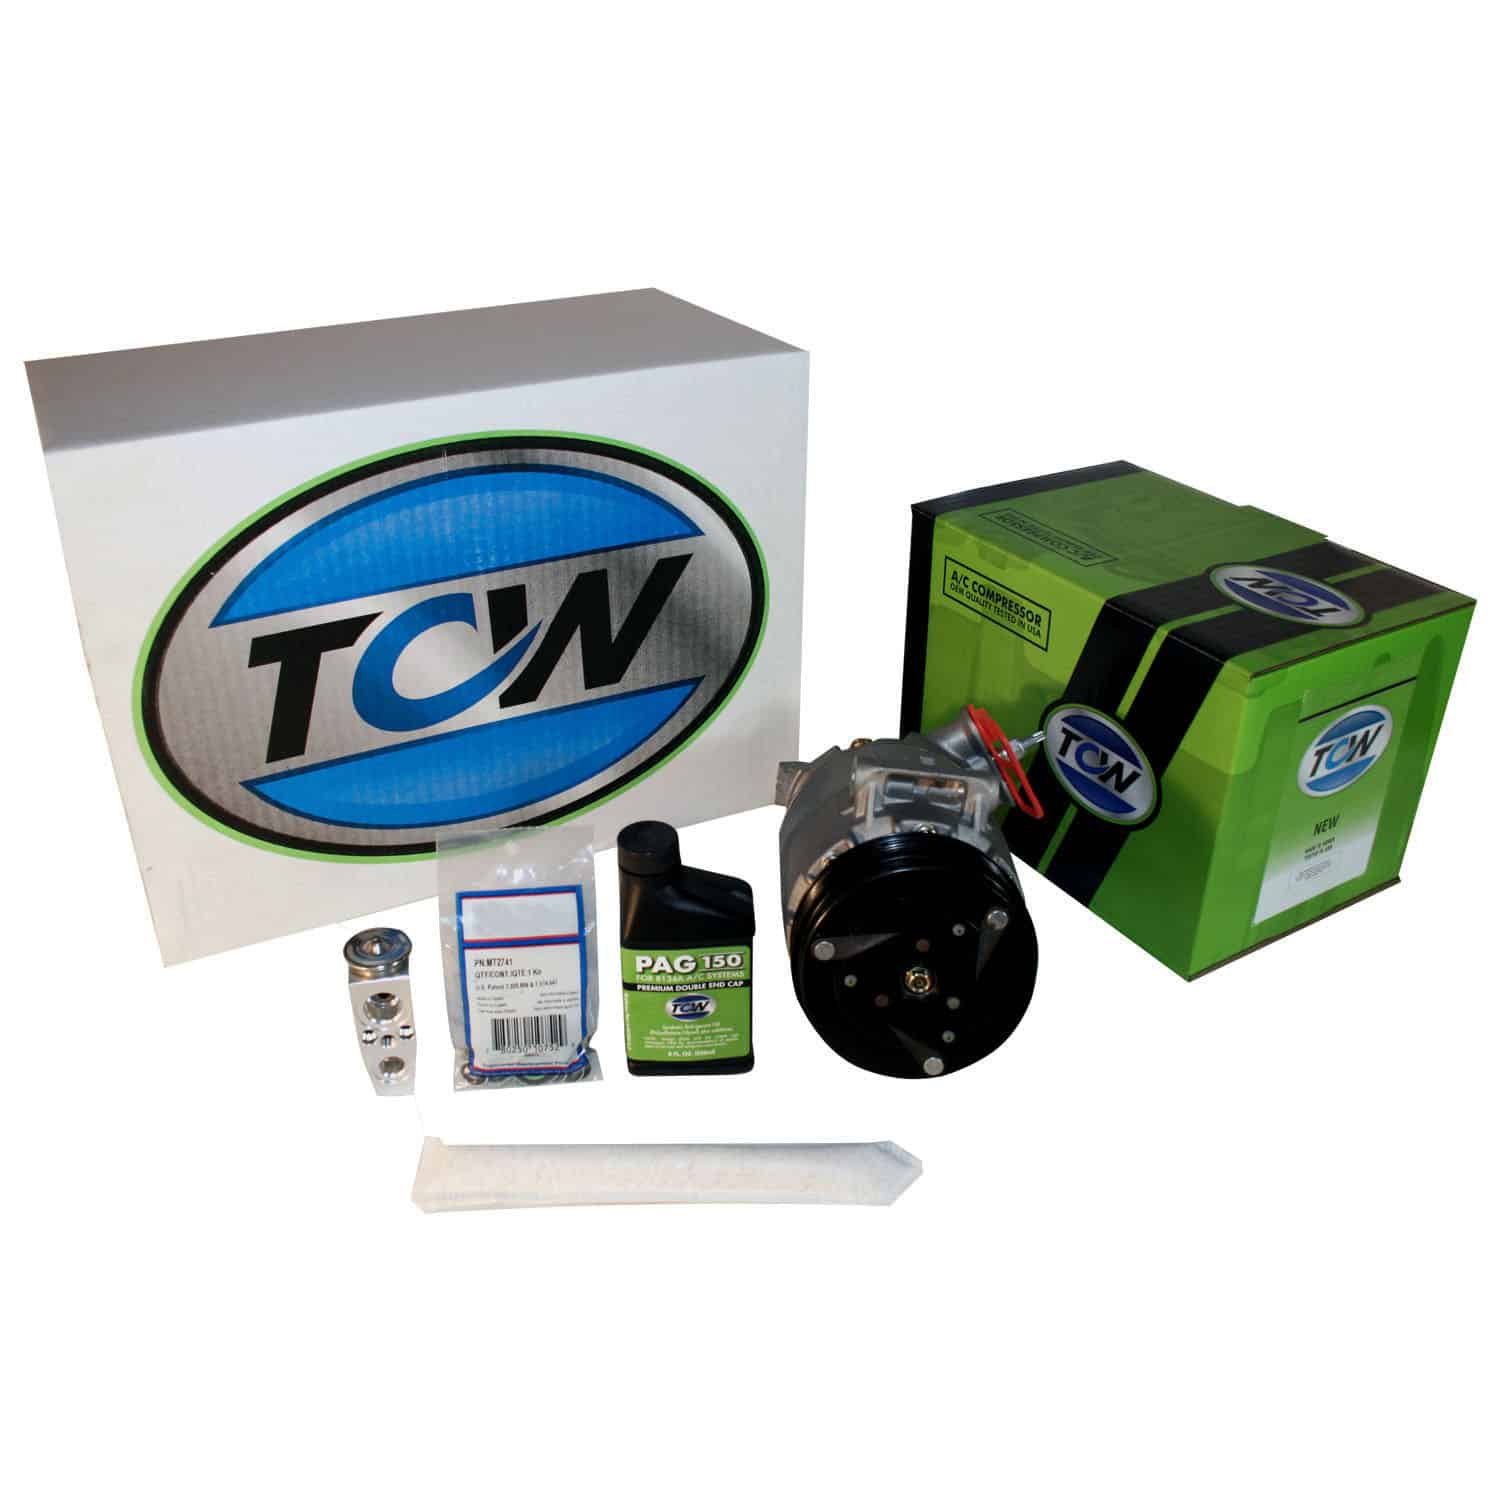 TCW Vehicle A/C Kit K1000225N New Product Image field_60b6a13a6e67c